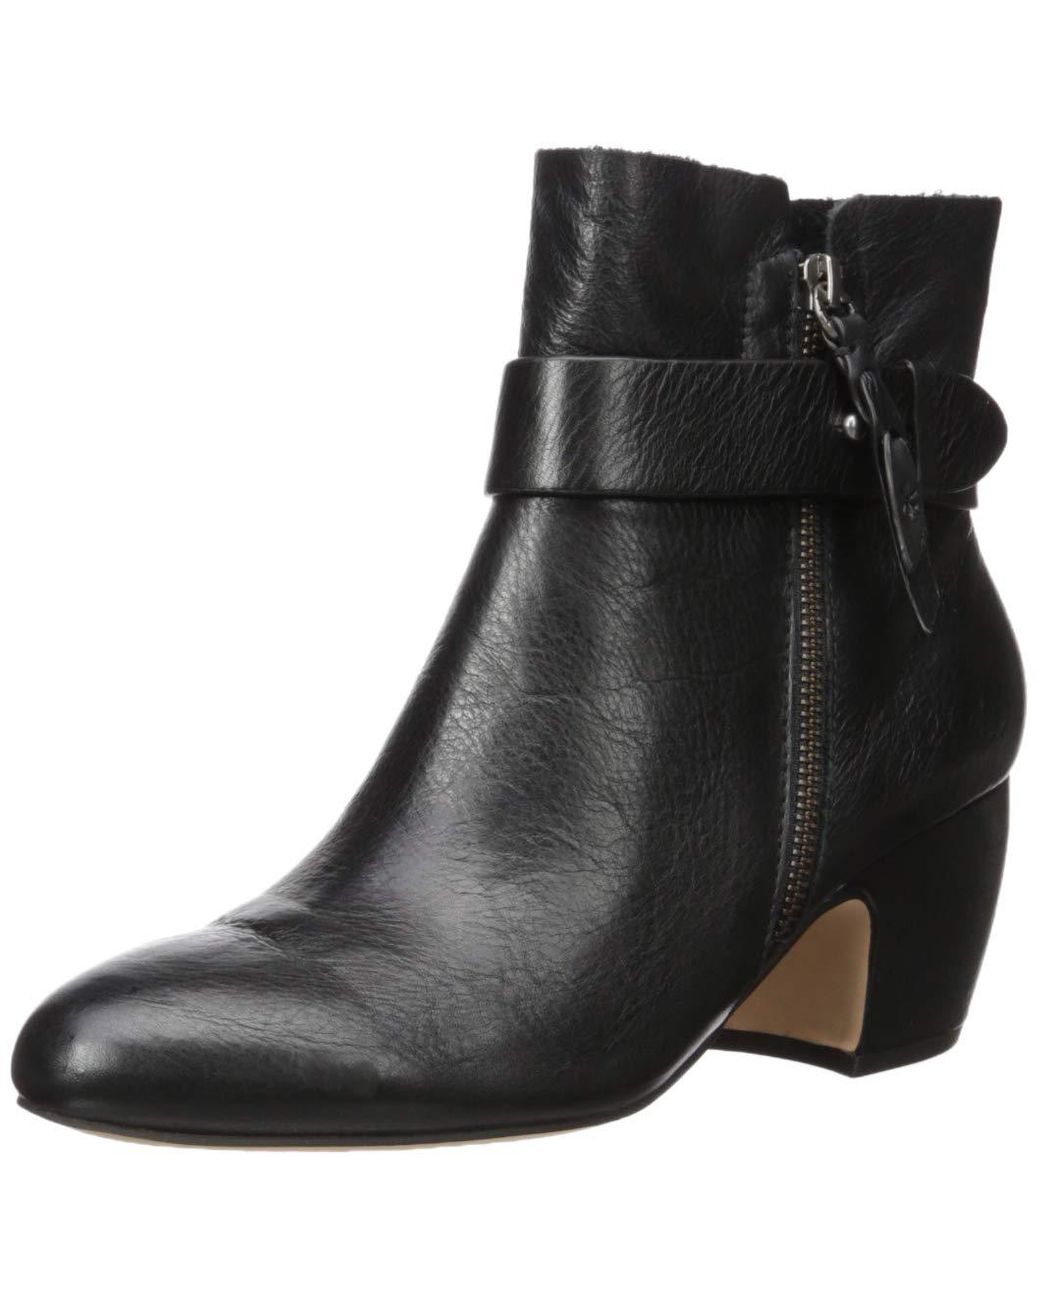 Splendid Leather Harlee Ankle Boot in Black - Lyst